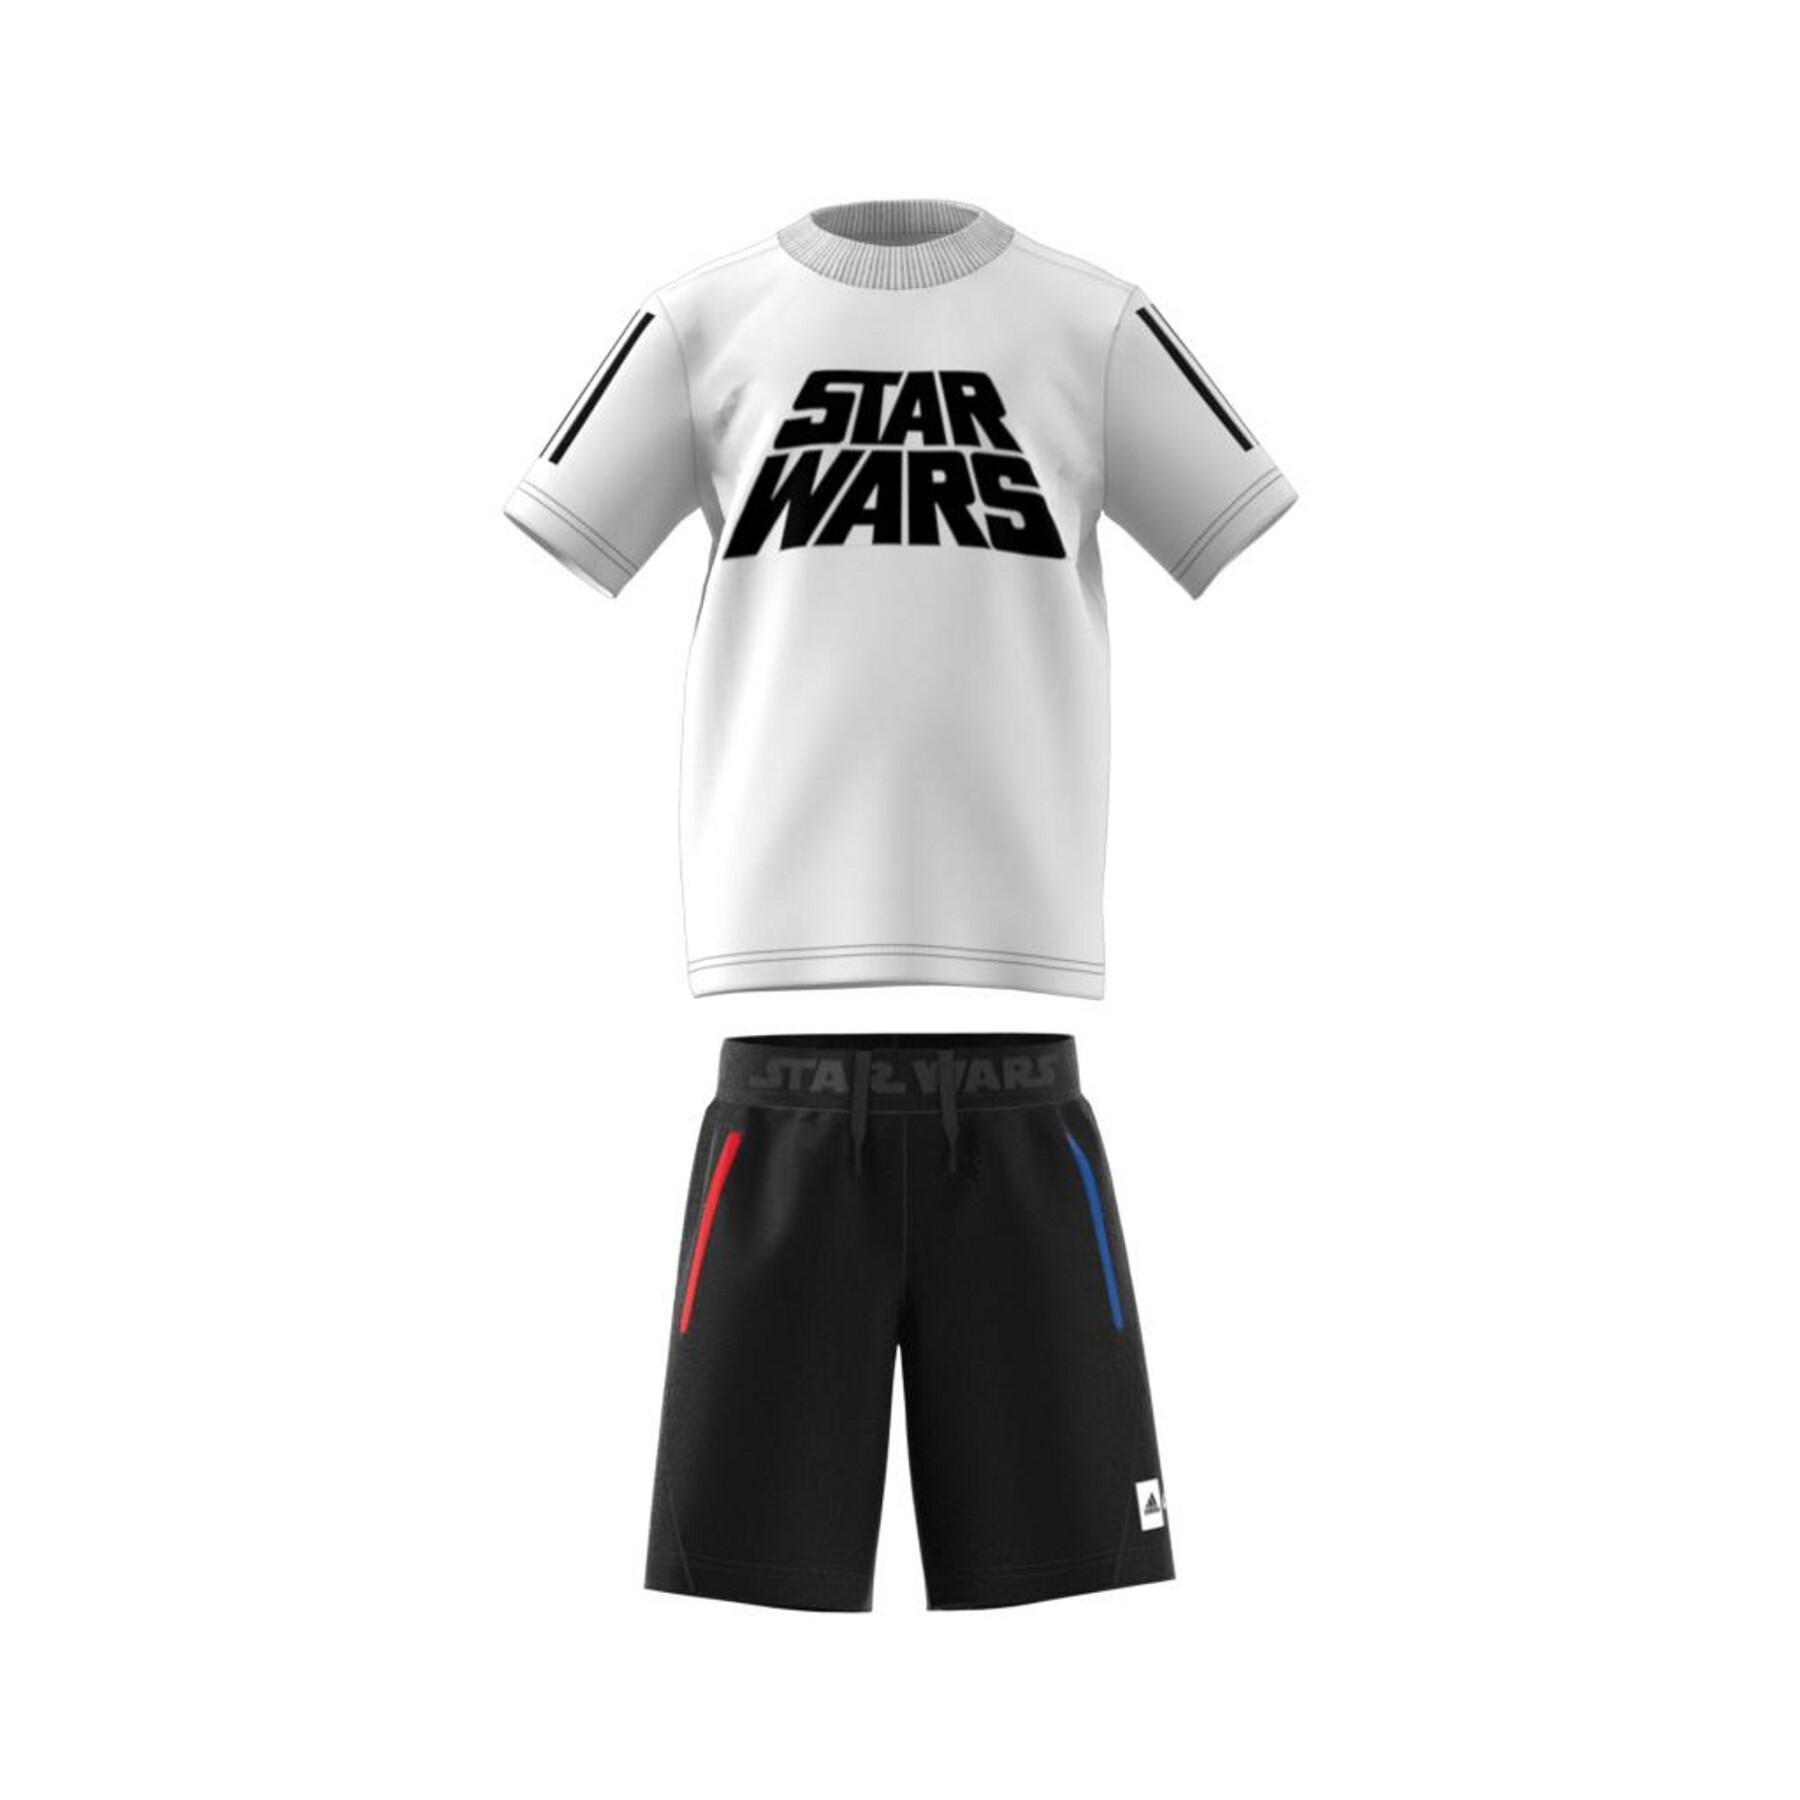 Minikit adidas Star Wars Summer